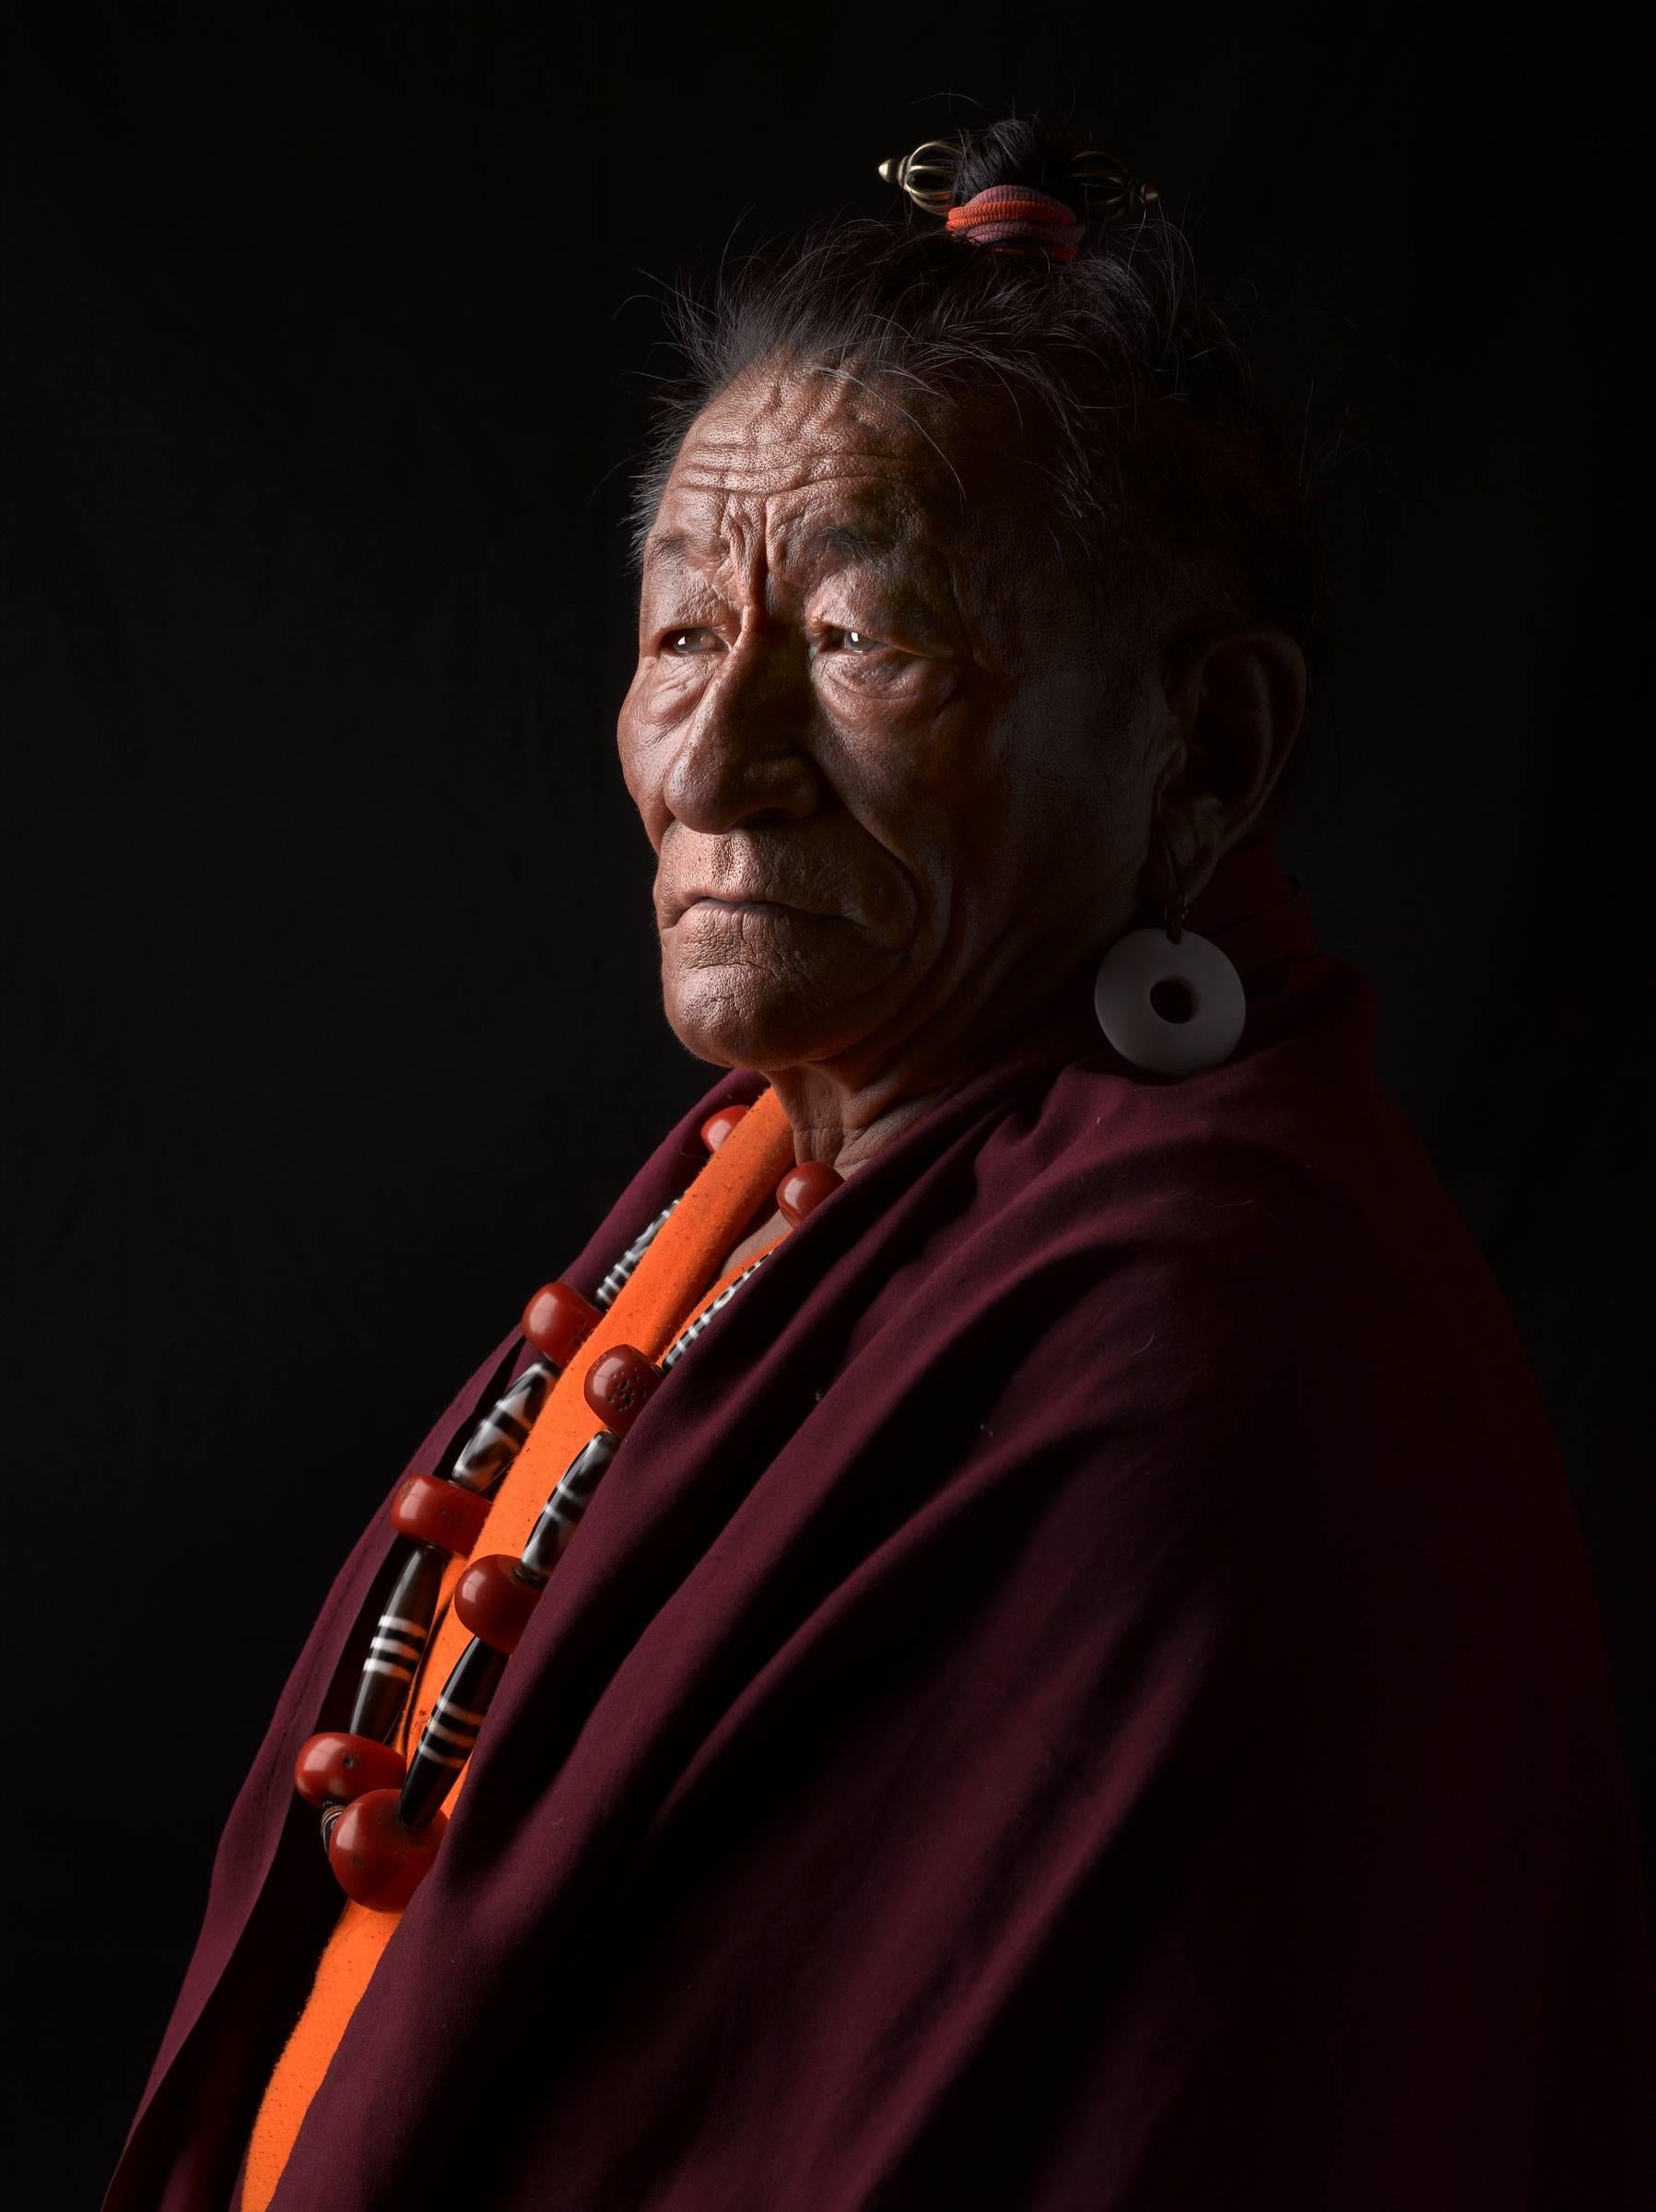 David Zimmerman Portrait Photograph - Wangdak Tashi, Portrait of a Tibetan